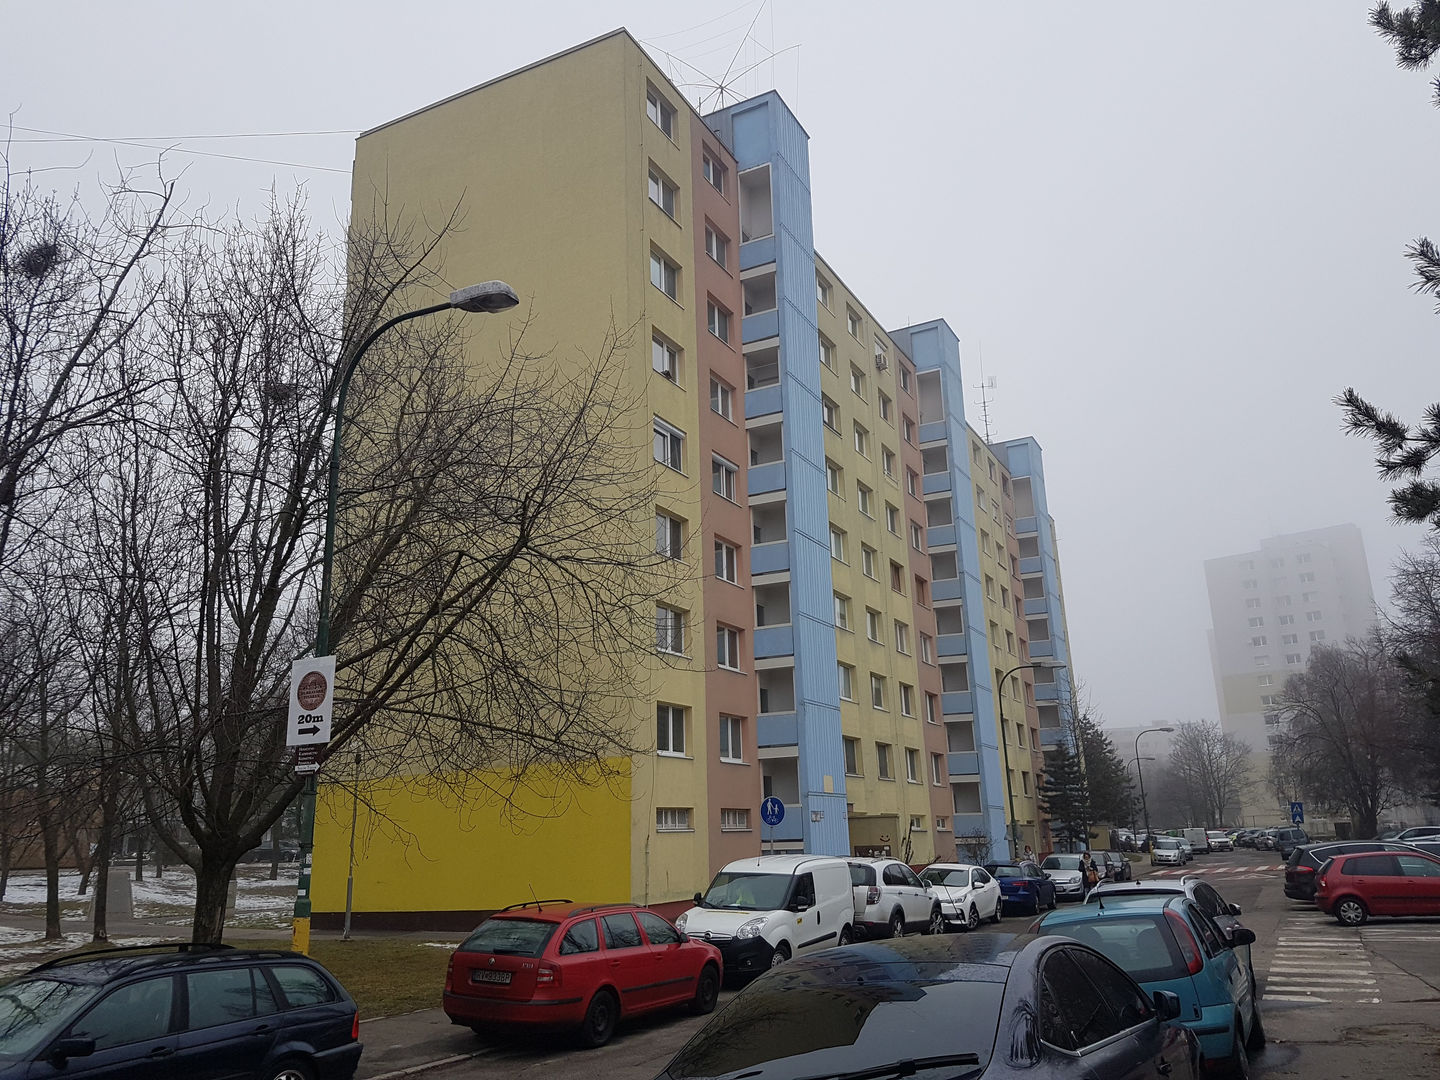 Bytový dom na Nejedlého 19,21,23 v Bratislave